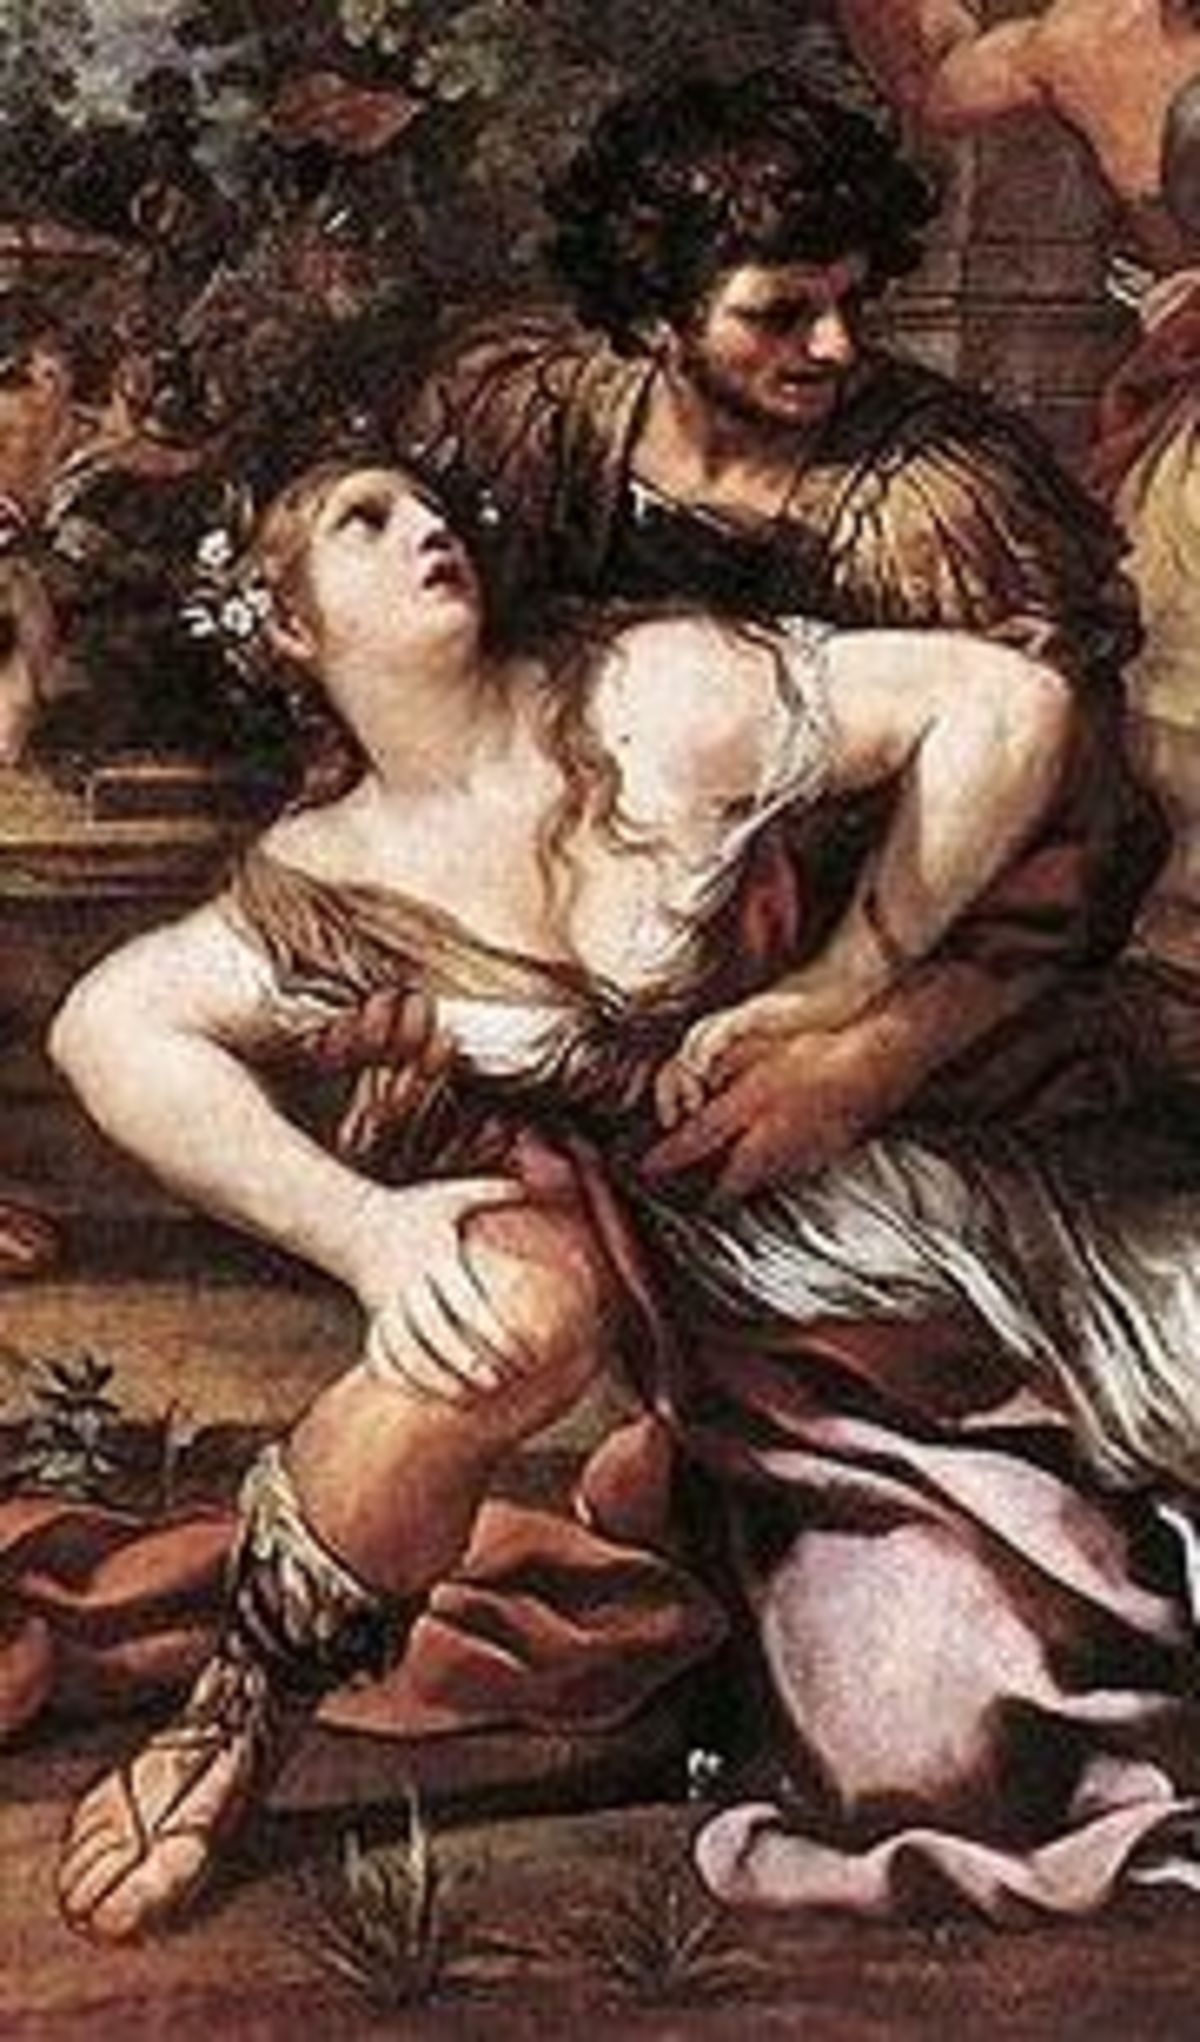 Rape Submission Porn - The Rape Fantasy | Psychology Today